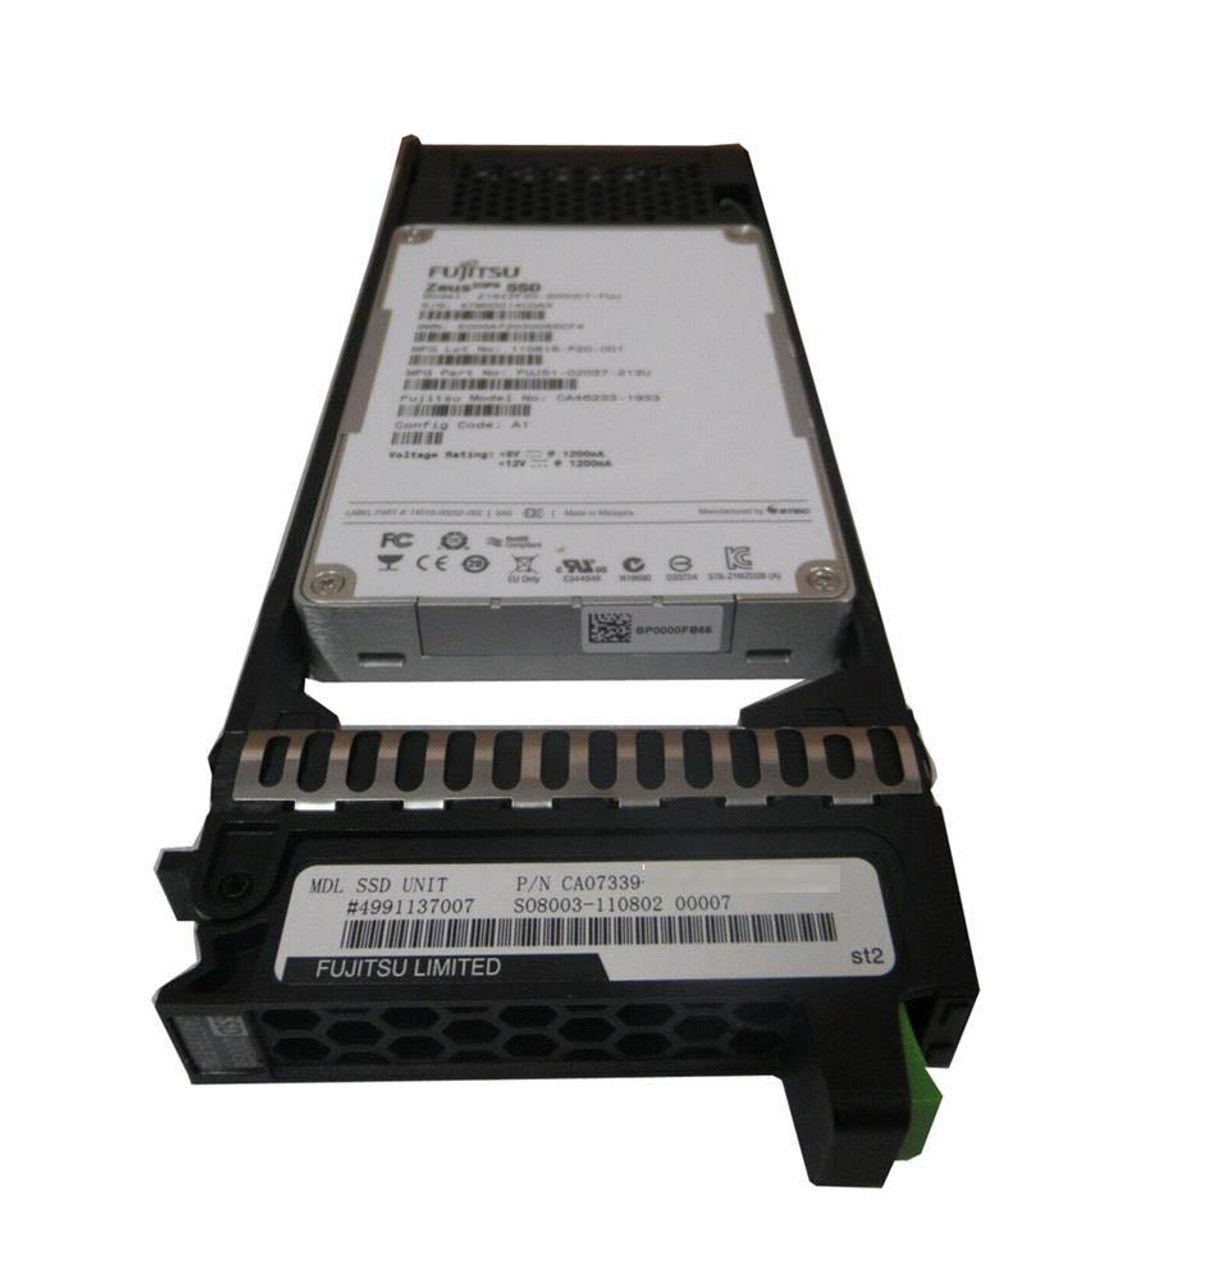 CA07339-E707 Fujitsu 200GB SAS 2.5-inch Internal Solid State Drive (SSD) for DX S2